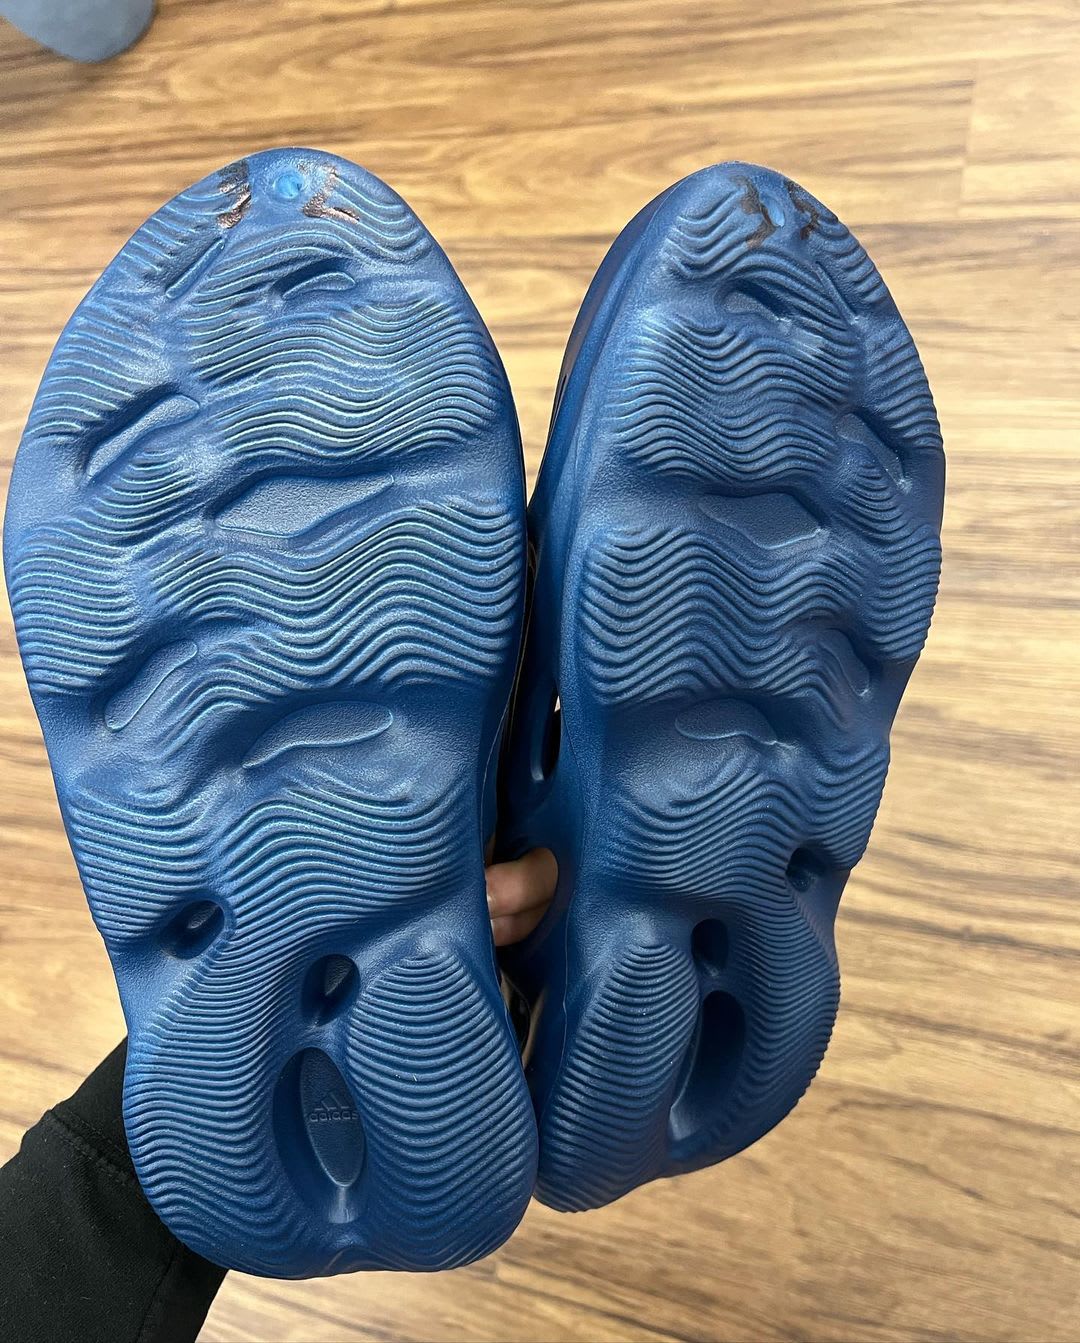 Adidas Yeezy Foam Runner 'Navy' Outsole